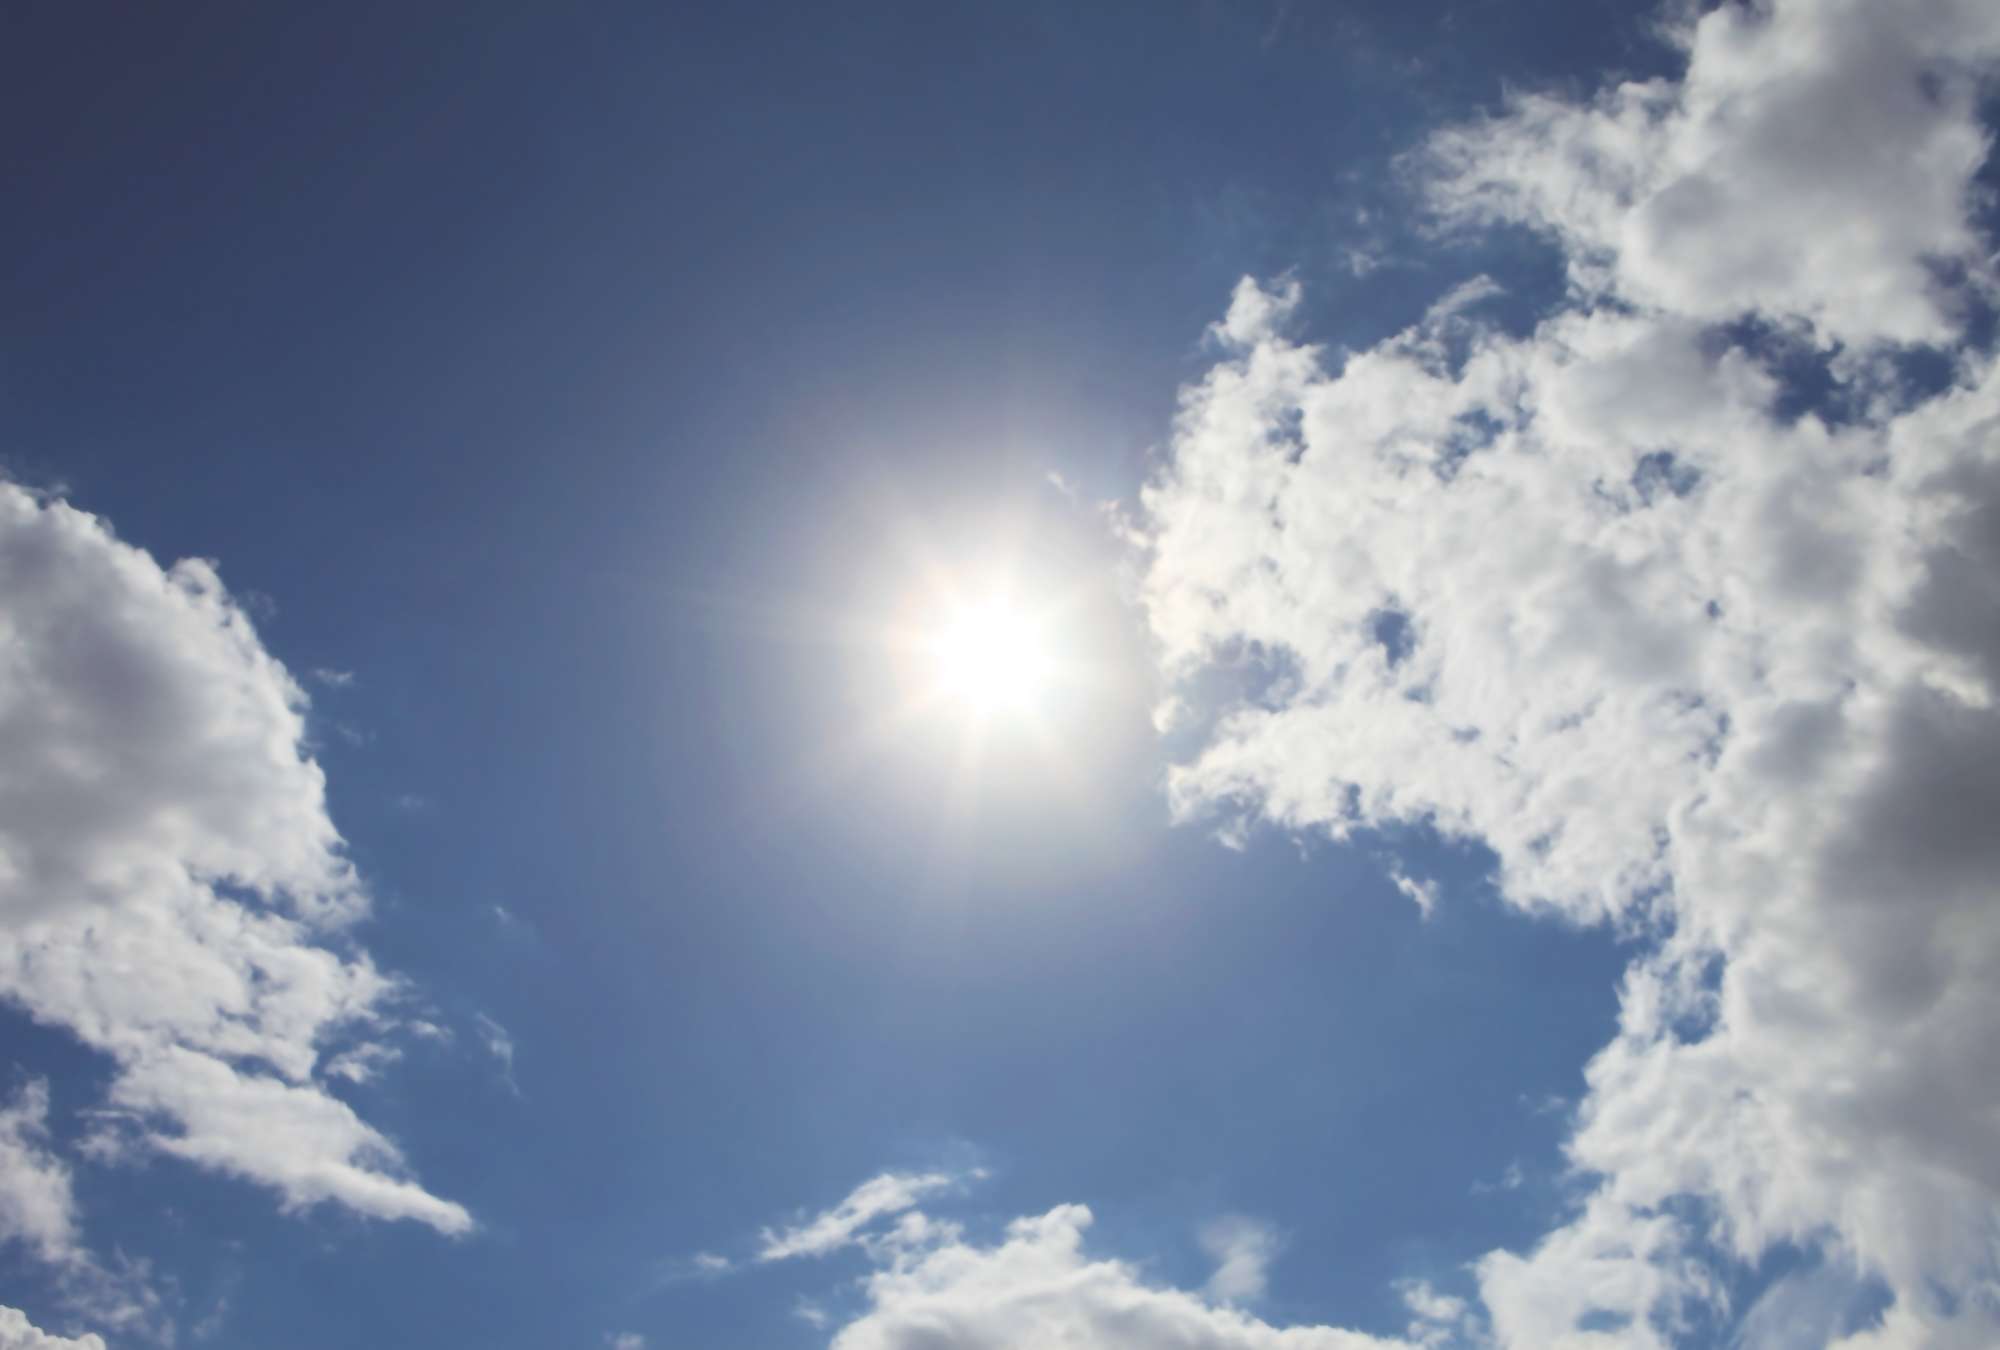             Himmel blau – Fototapete Sonnenschein & blauem Wolkenhimmel
        